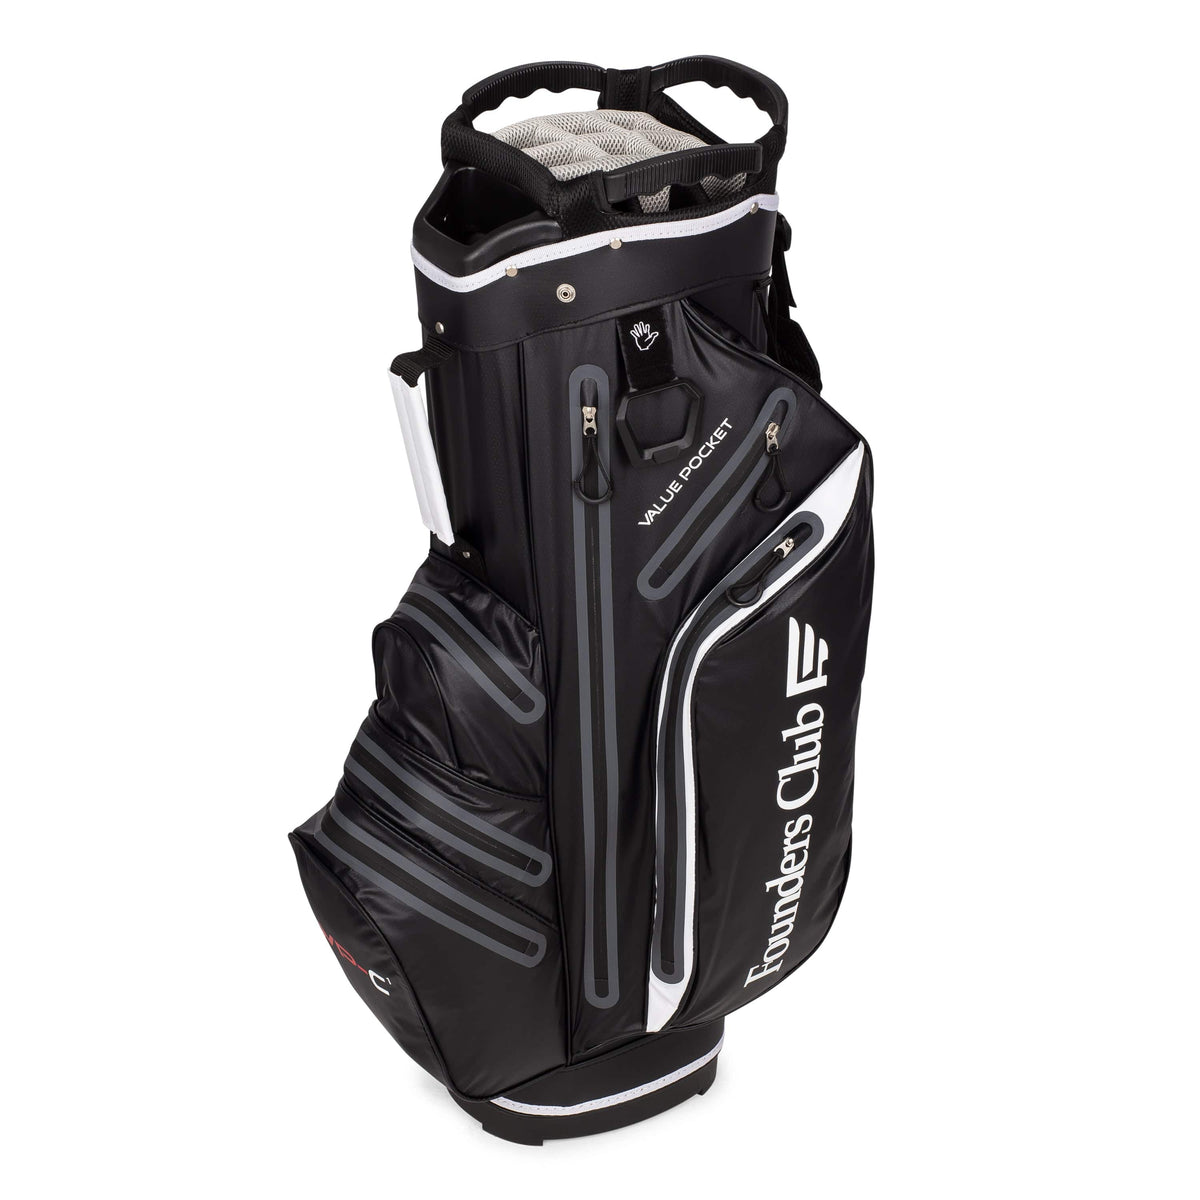 Founders Club Waterproof 14-Way Divider Golf Cart Bag